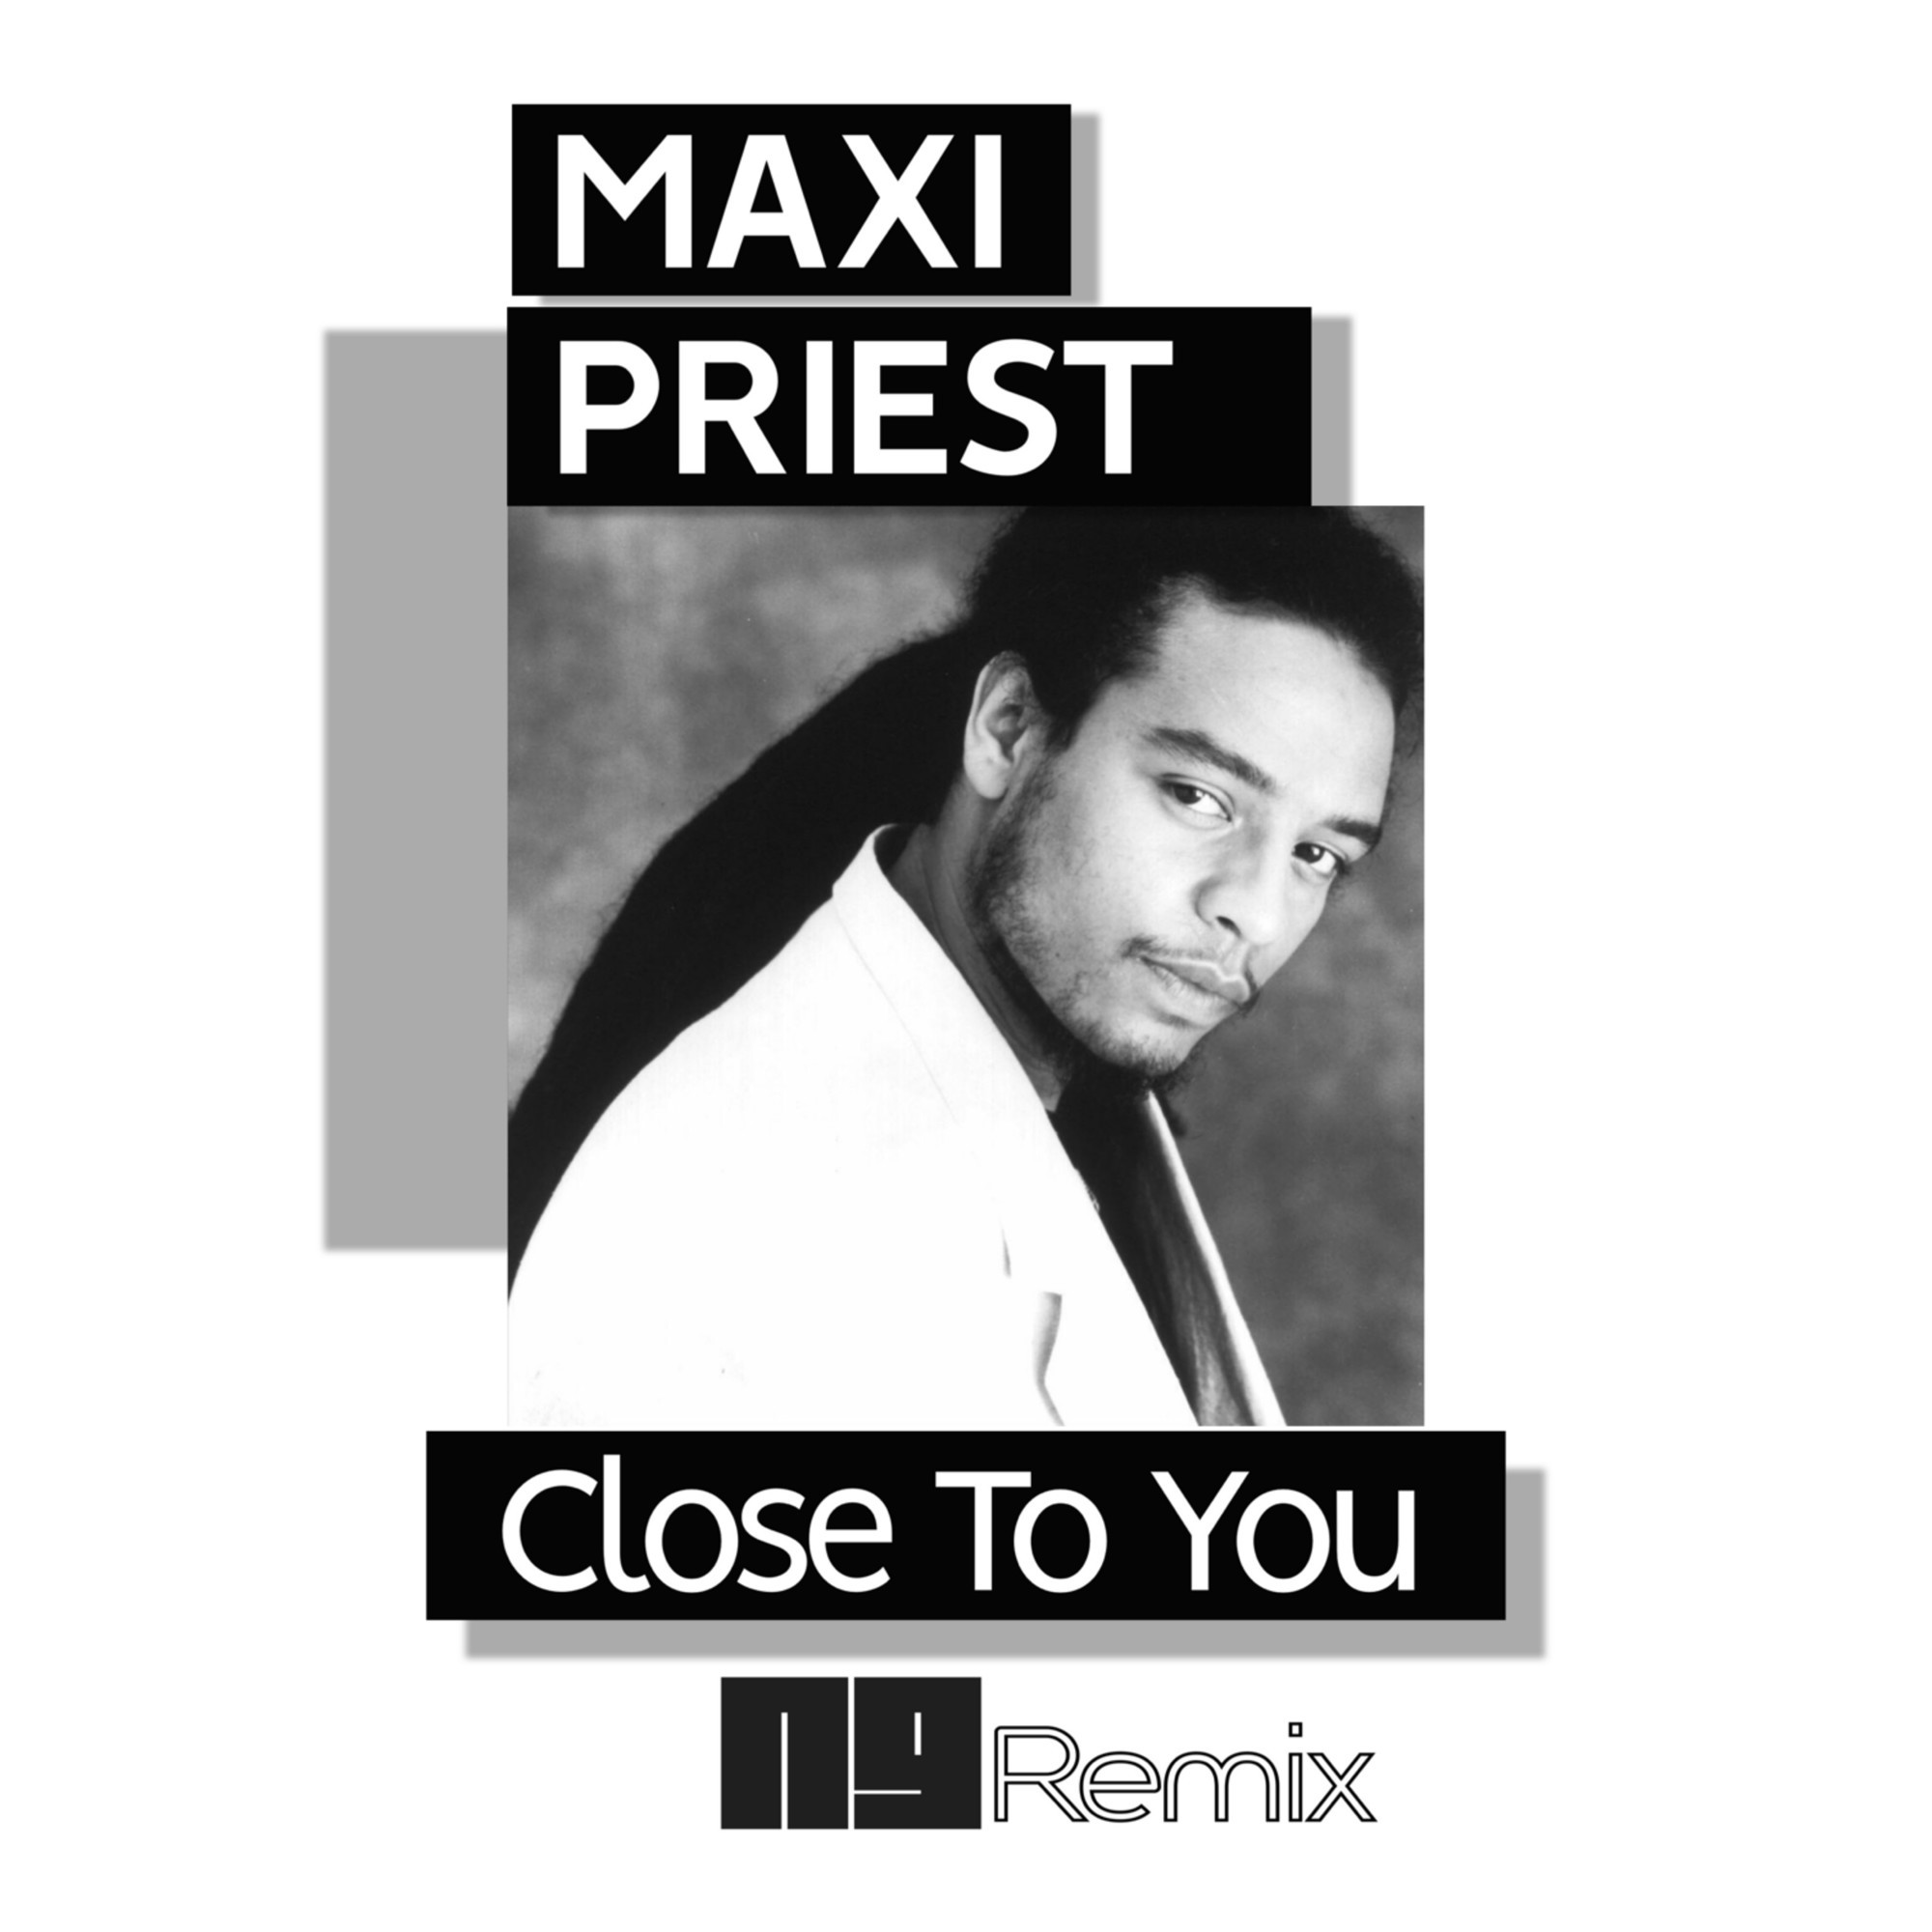 Lyrics close to you maxi priest